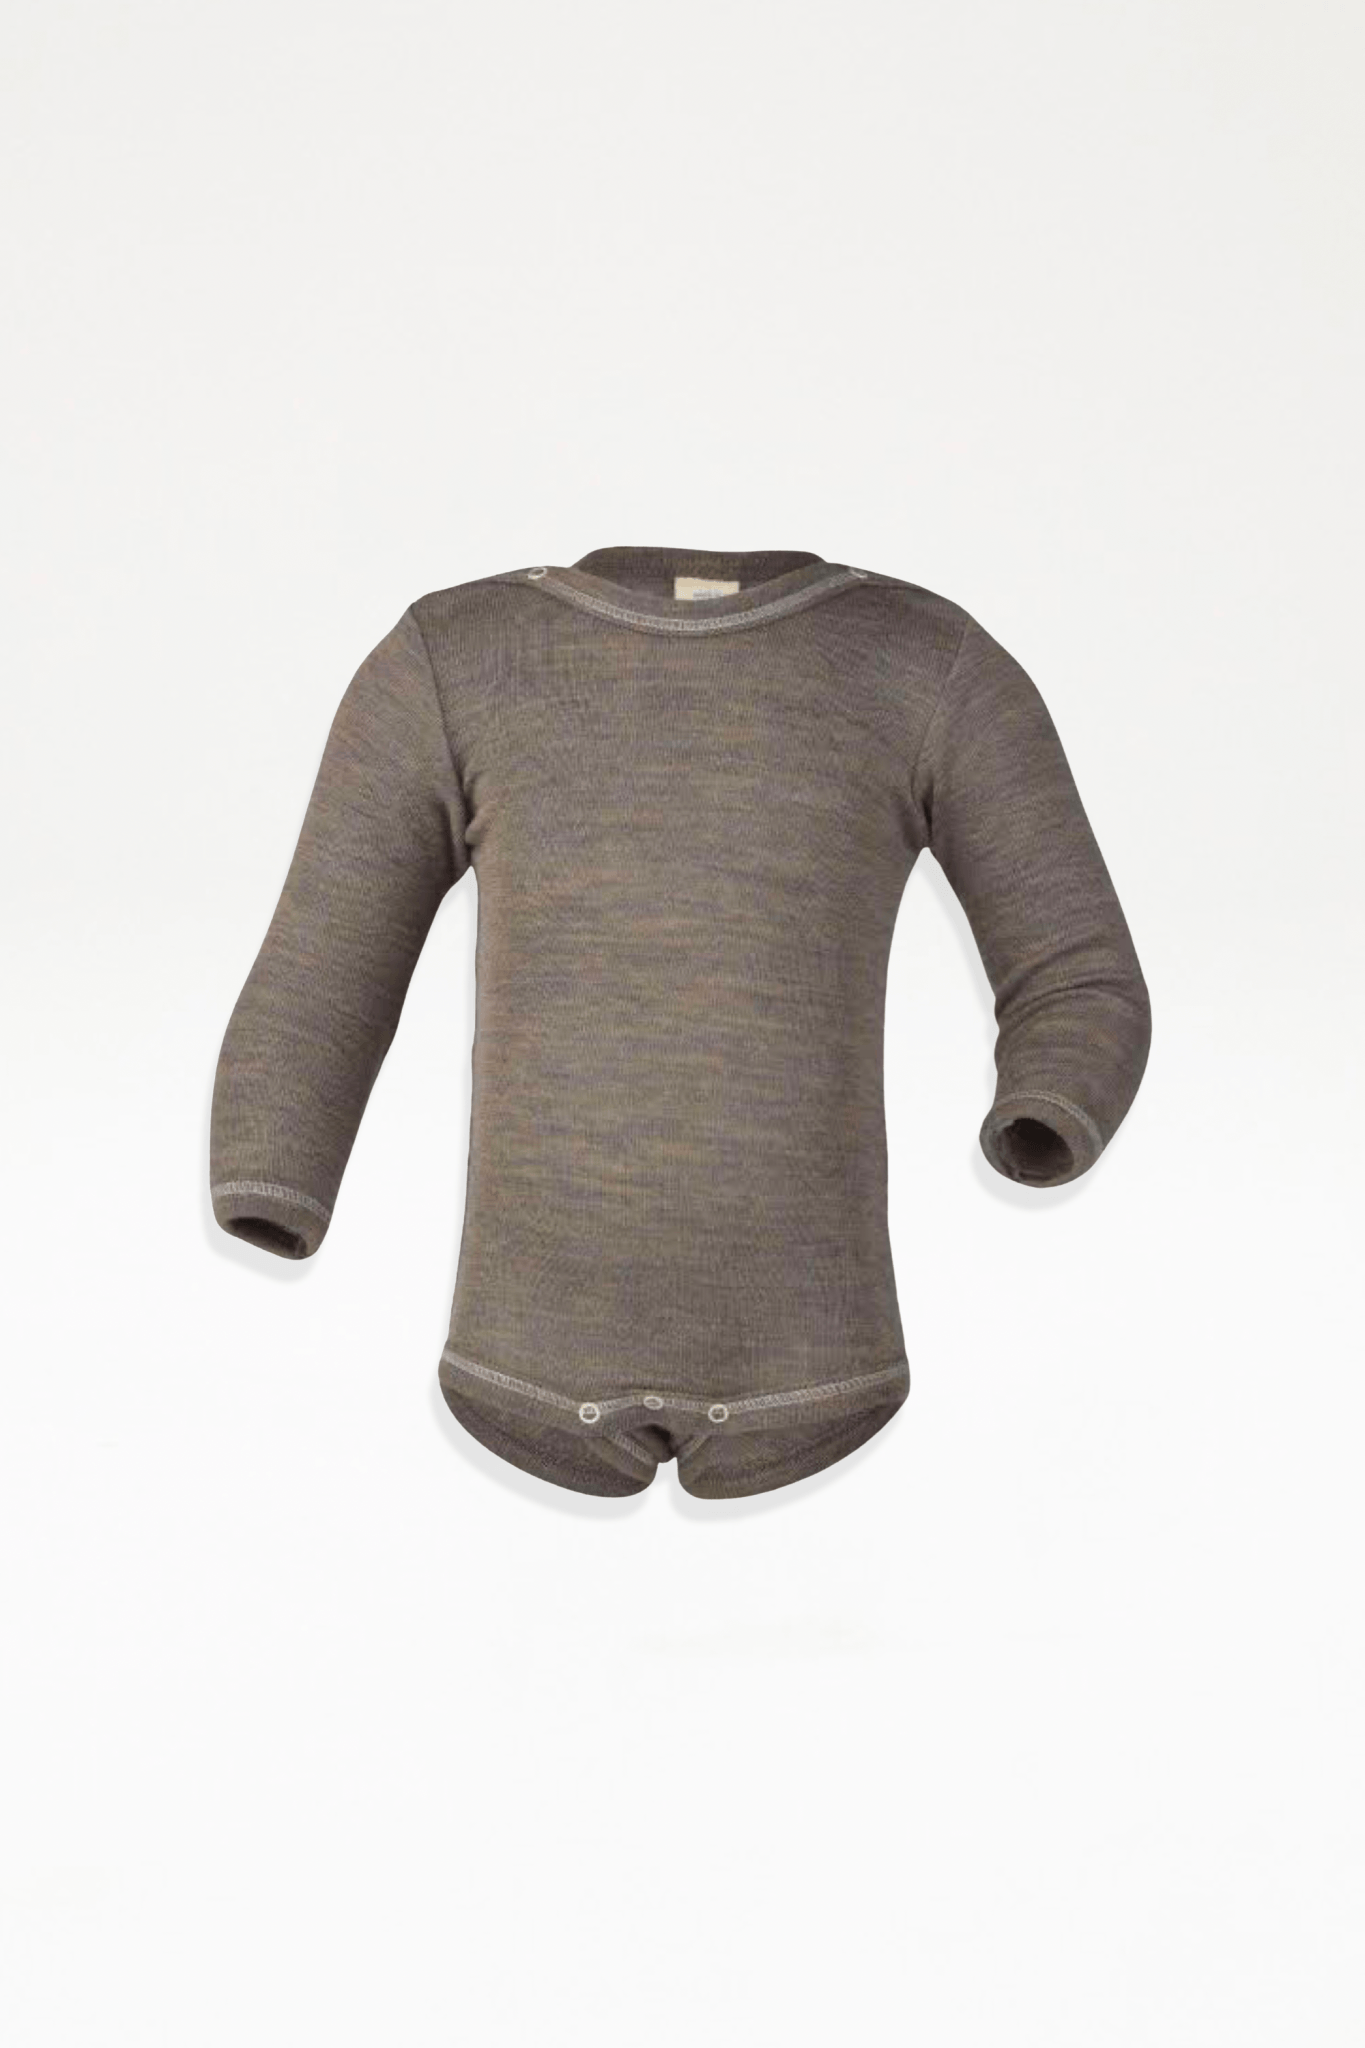 Engel - Baby Organic Wool/Silk Long Sleeved Bodysuit - Walnut - Ensemble Studios